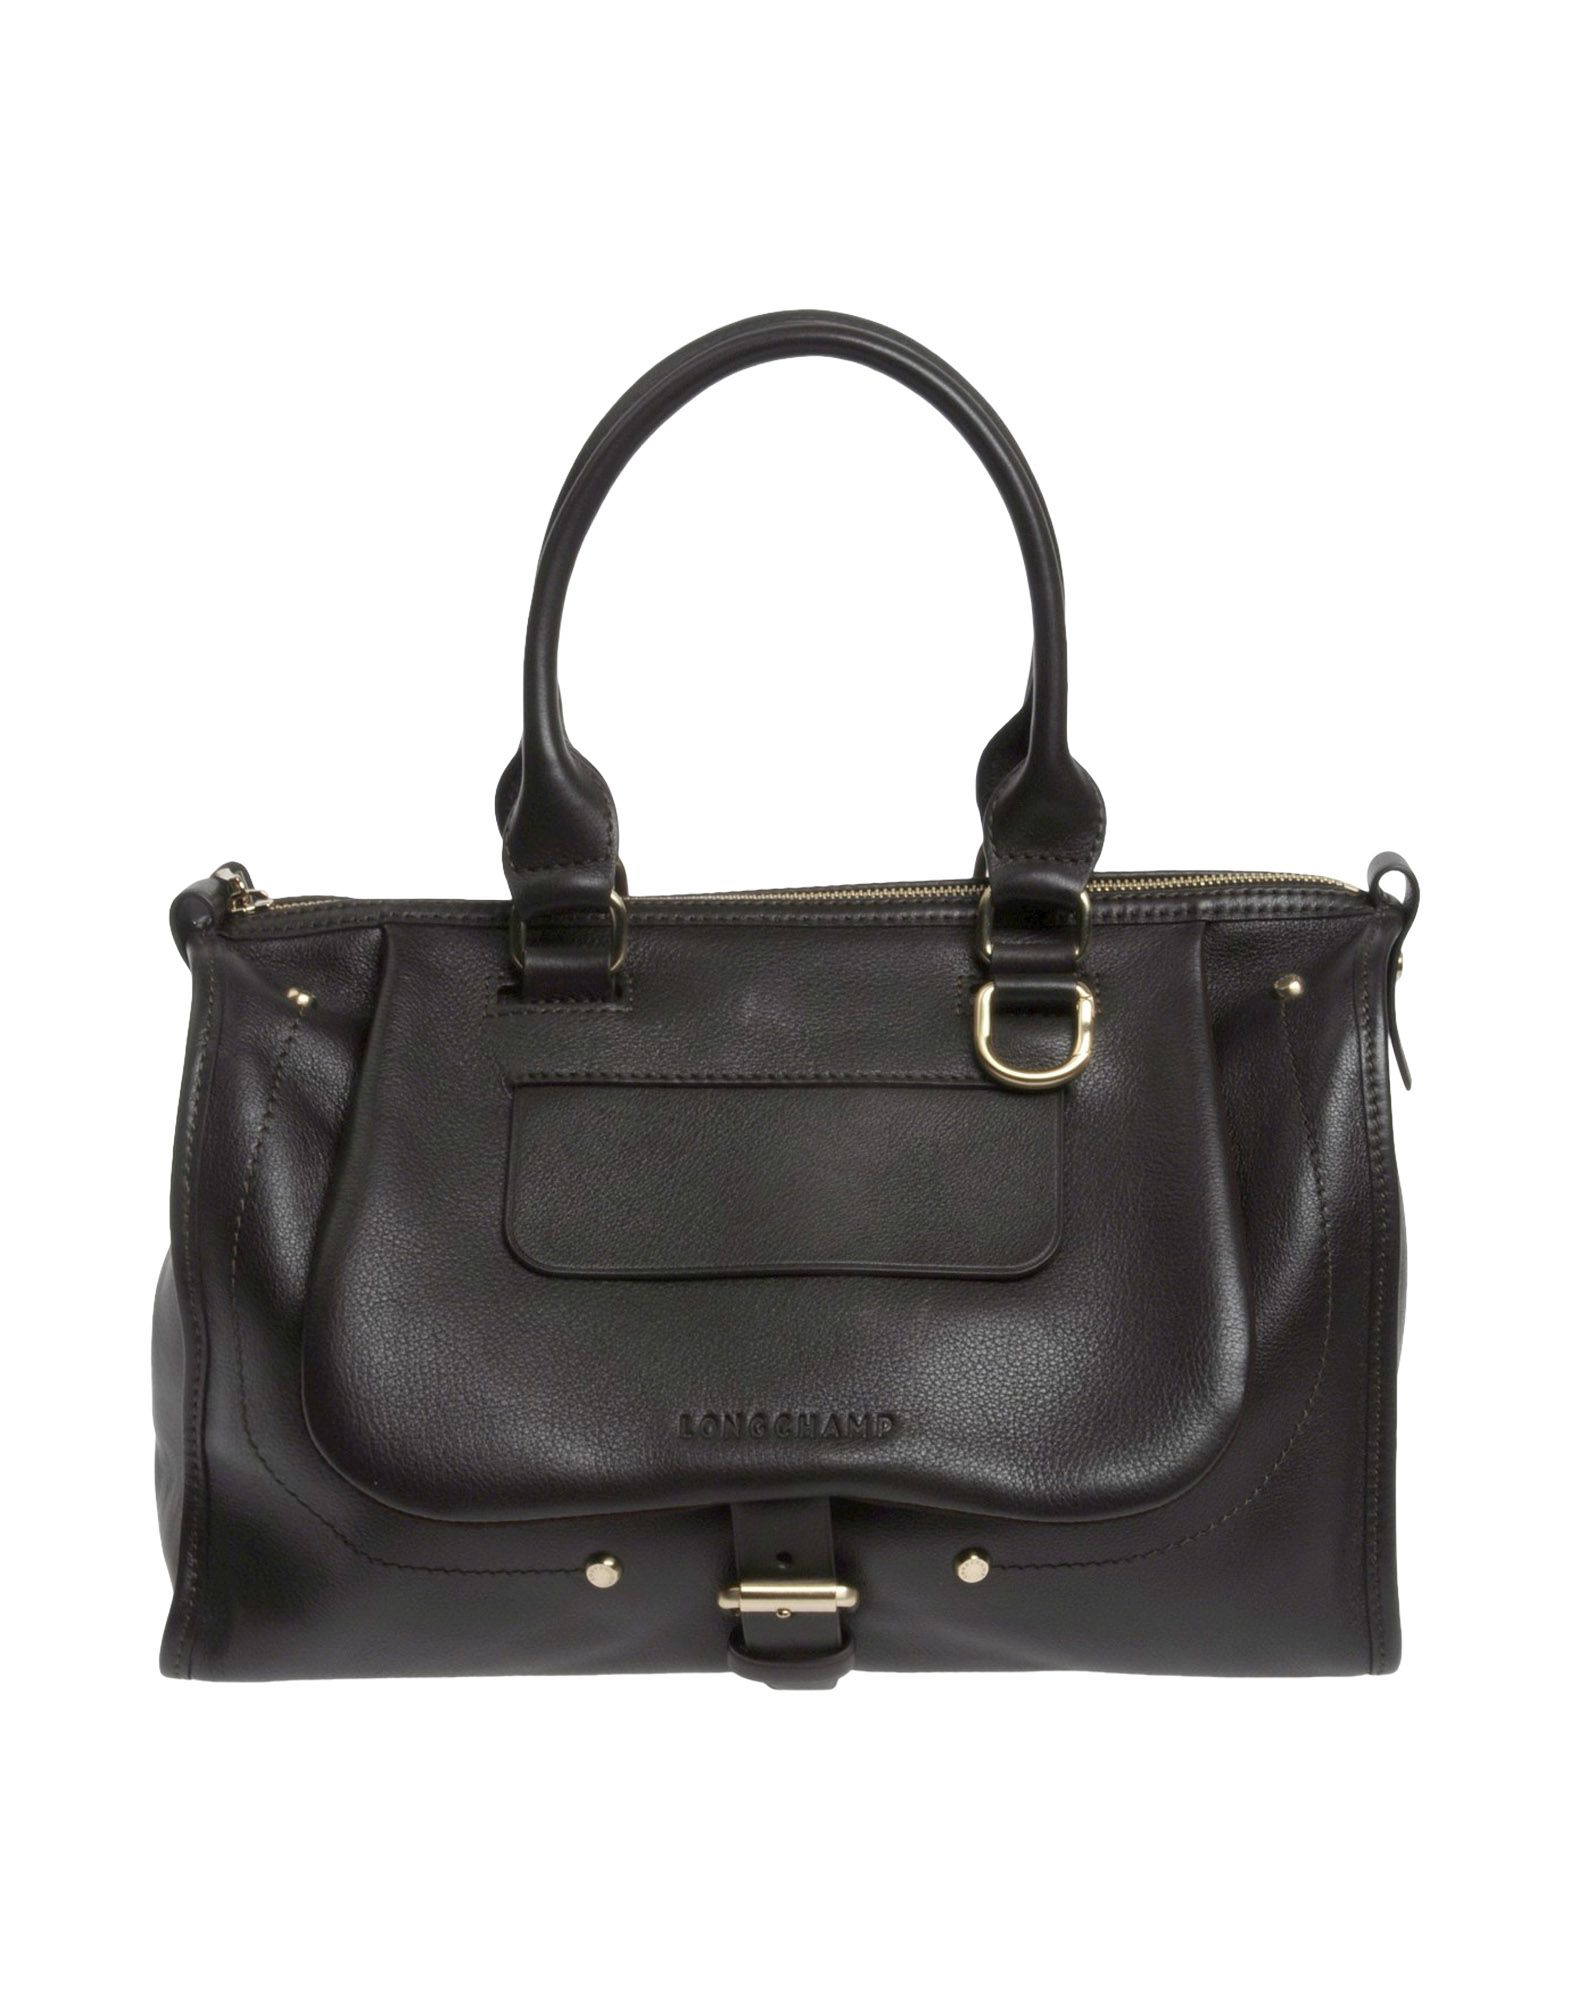 Longchamp Medium Leather Bag in Black (Dark brown) | Lyst